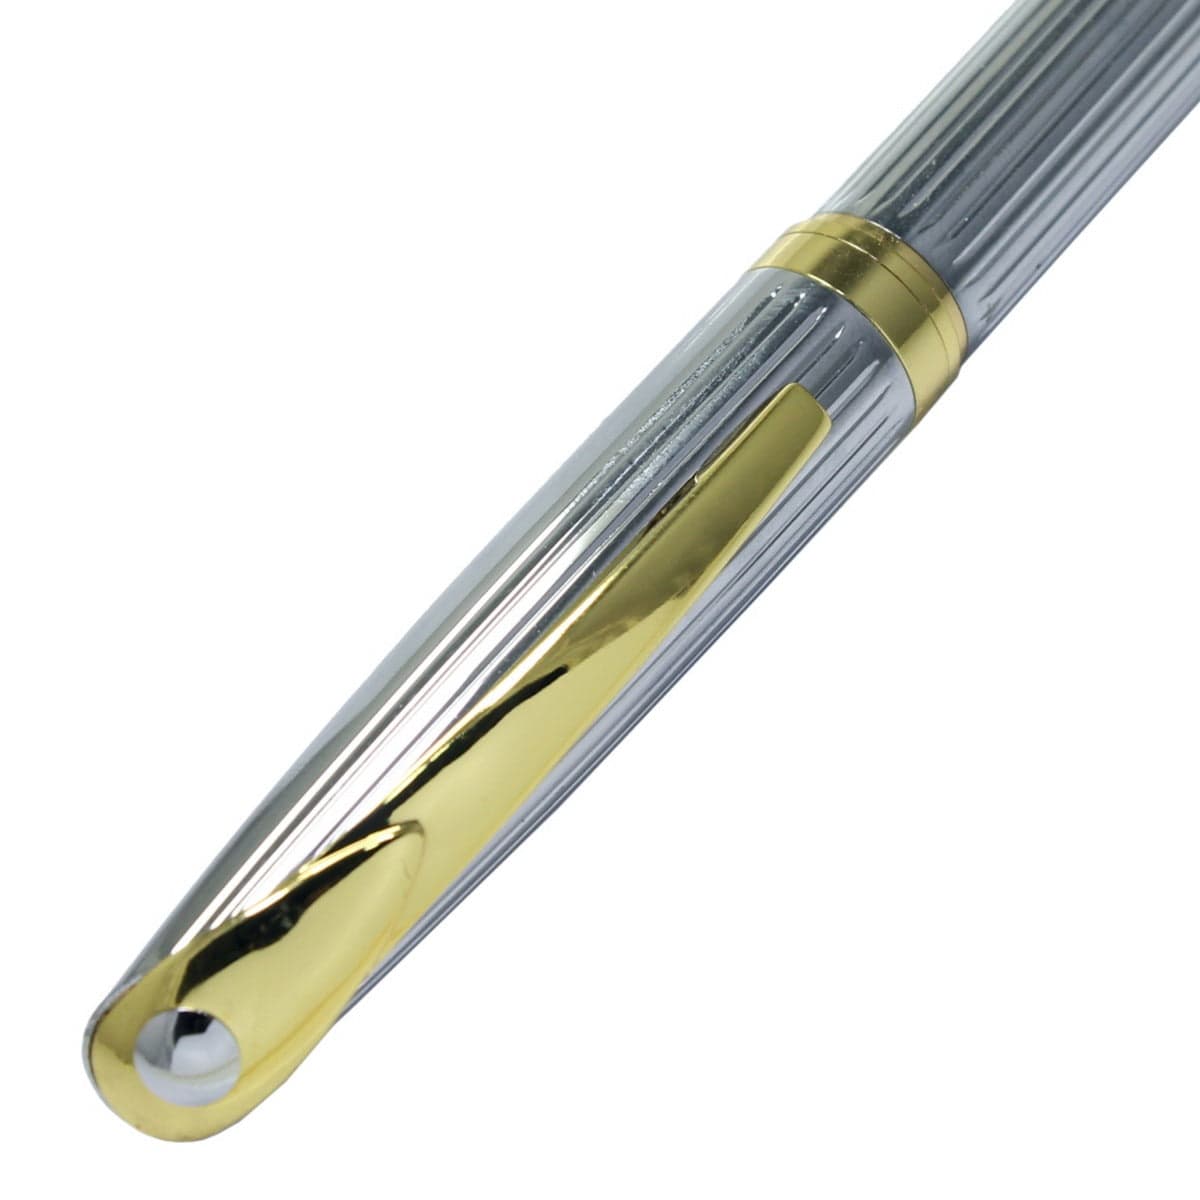 jags-mumbai Ball Pens Silver and Gold Ballpoint Pen with Golden Clip